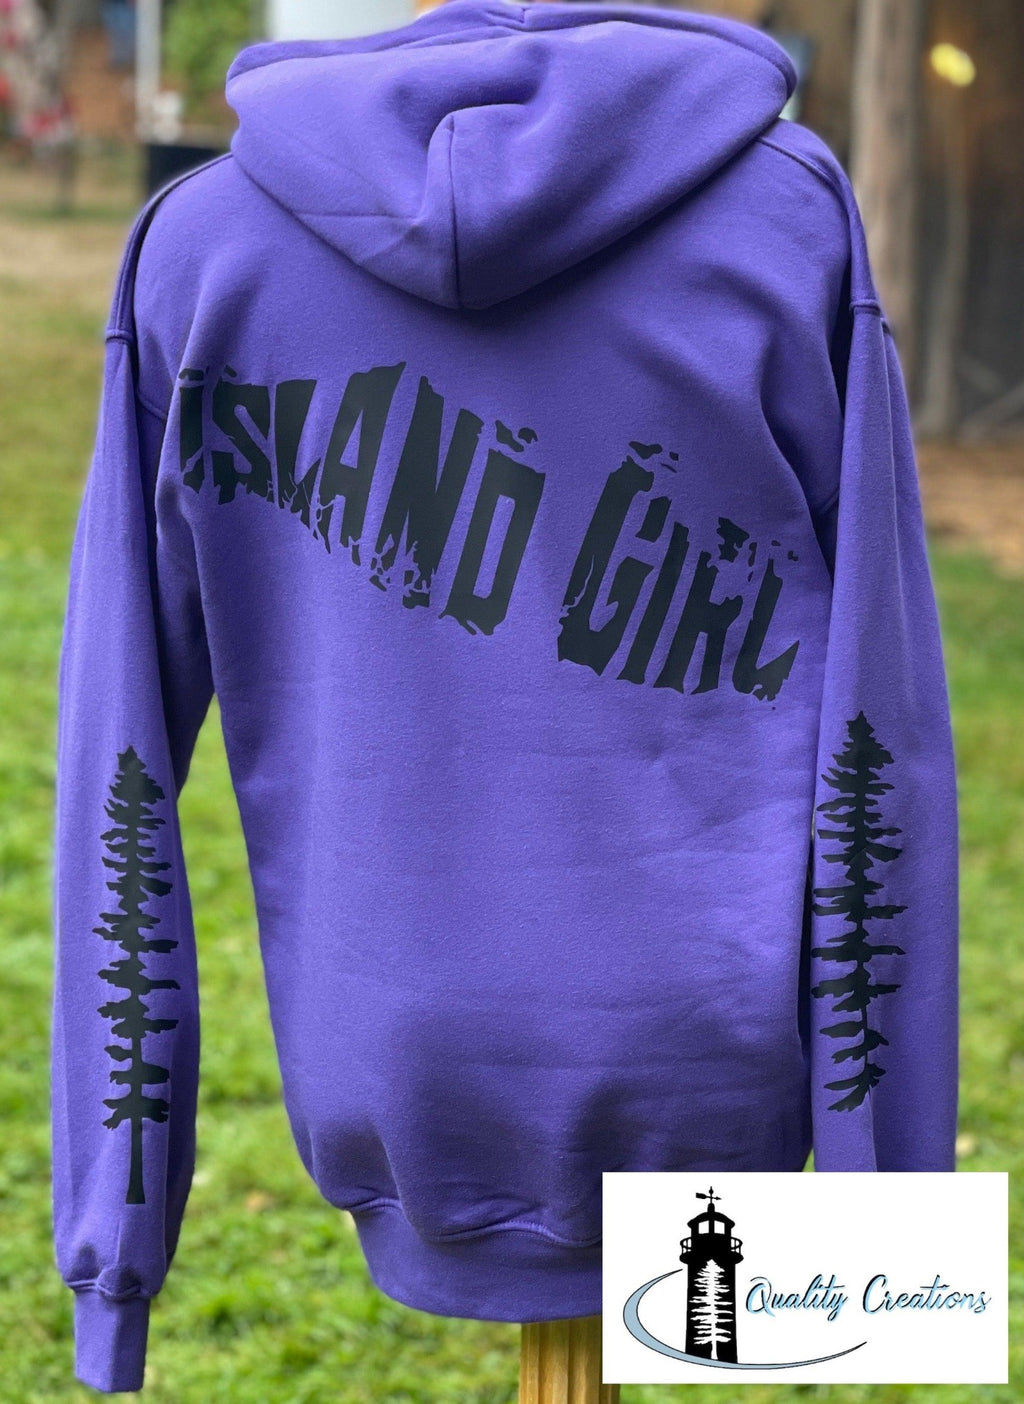 Island Girl Hoodie - Quality Creations Vancouver Island canada